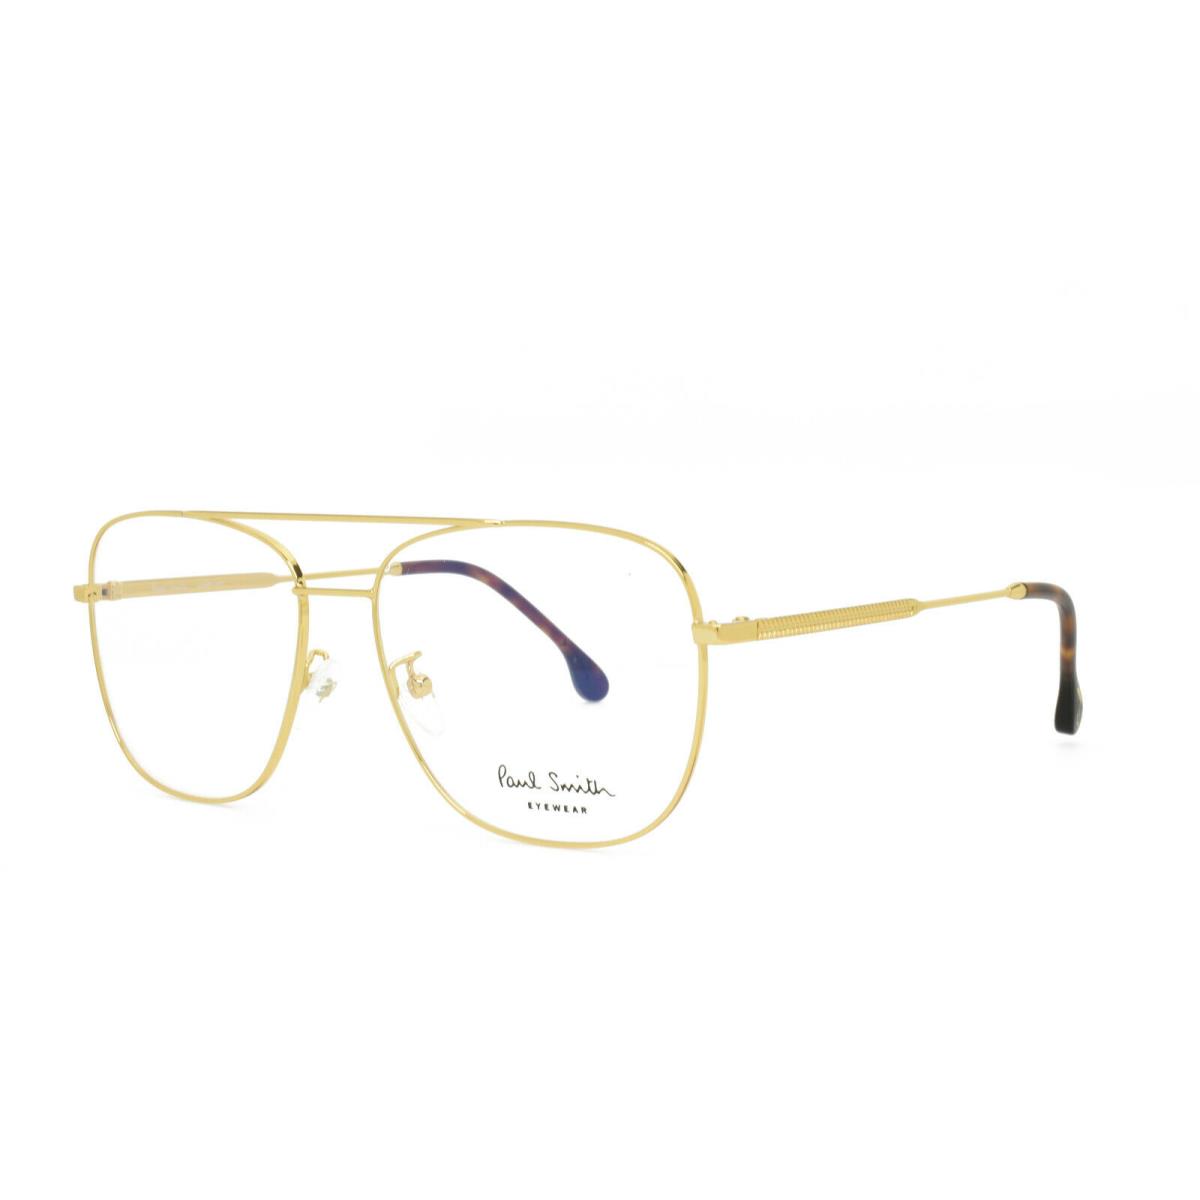 Paul Smith Avery V2 Aviator Eyeglasses Frames Gold 58-15-145